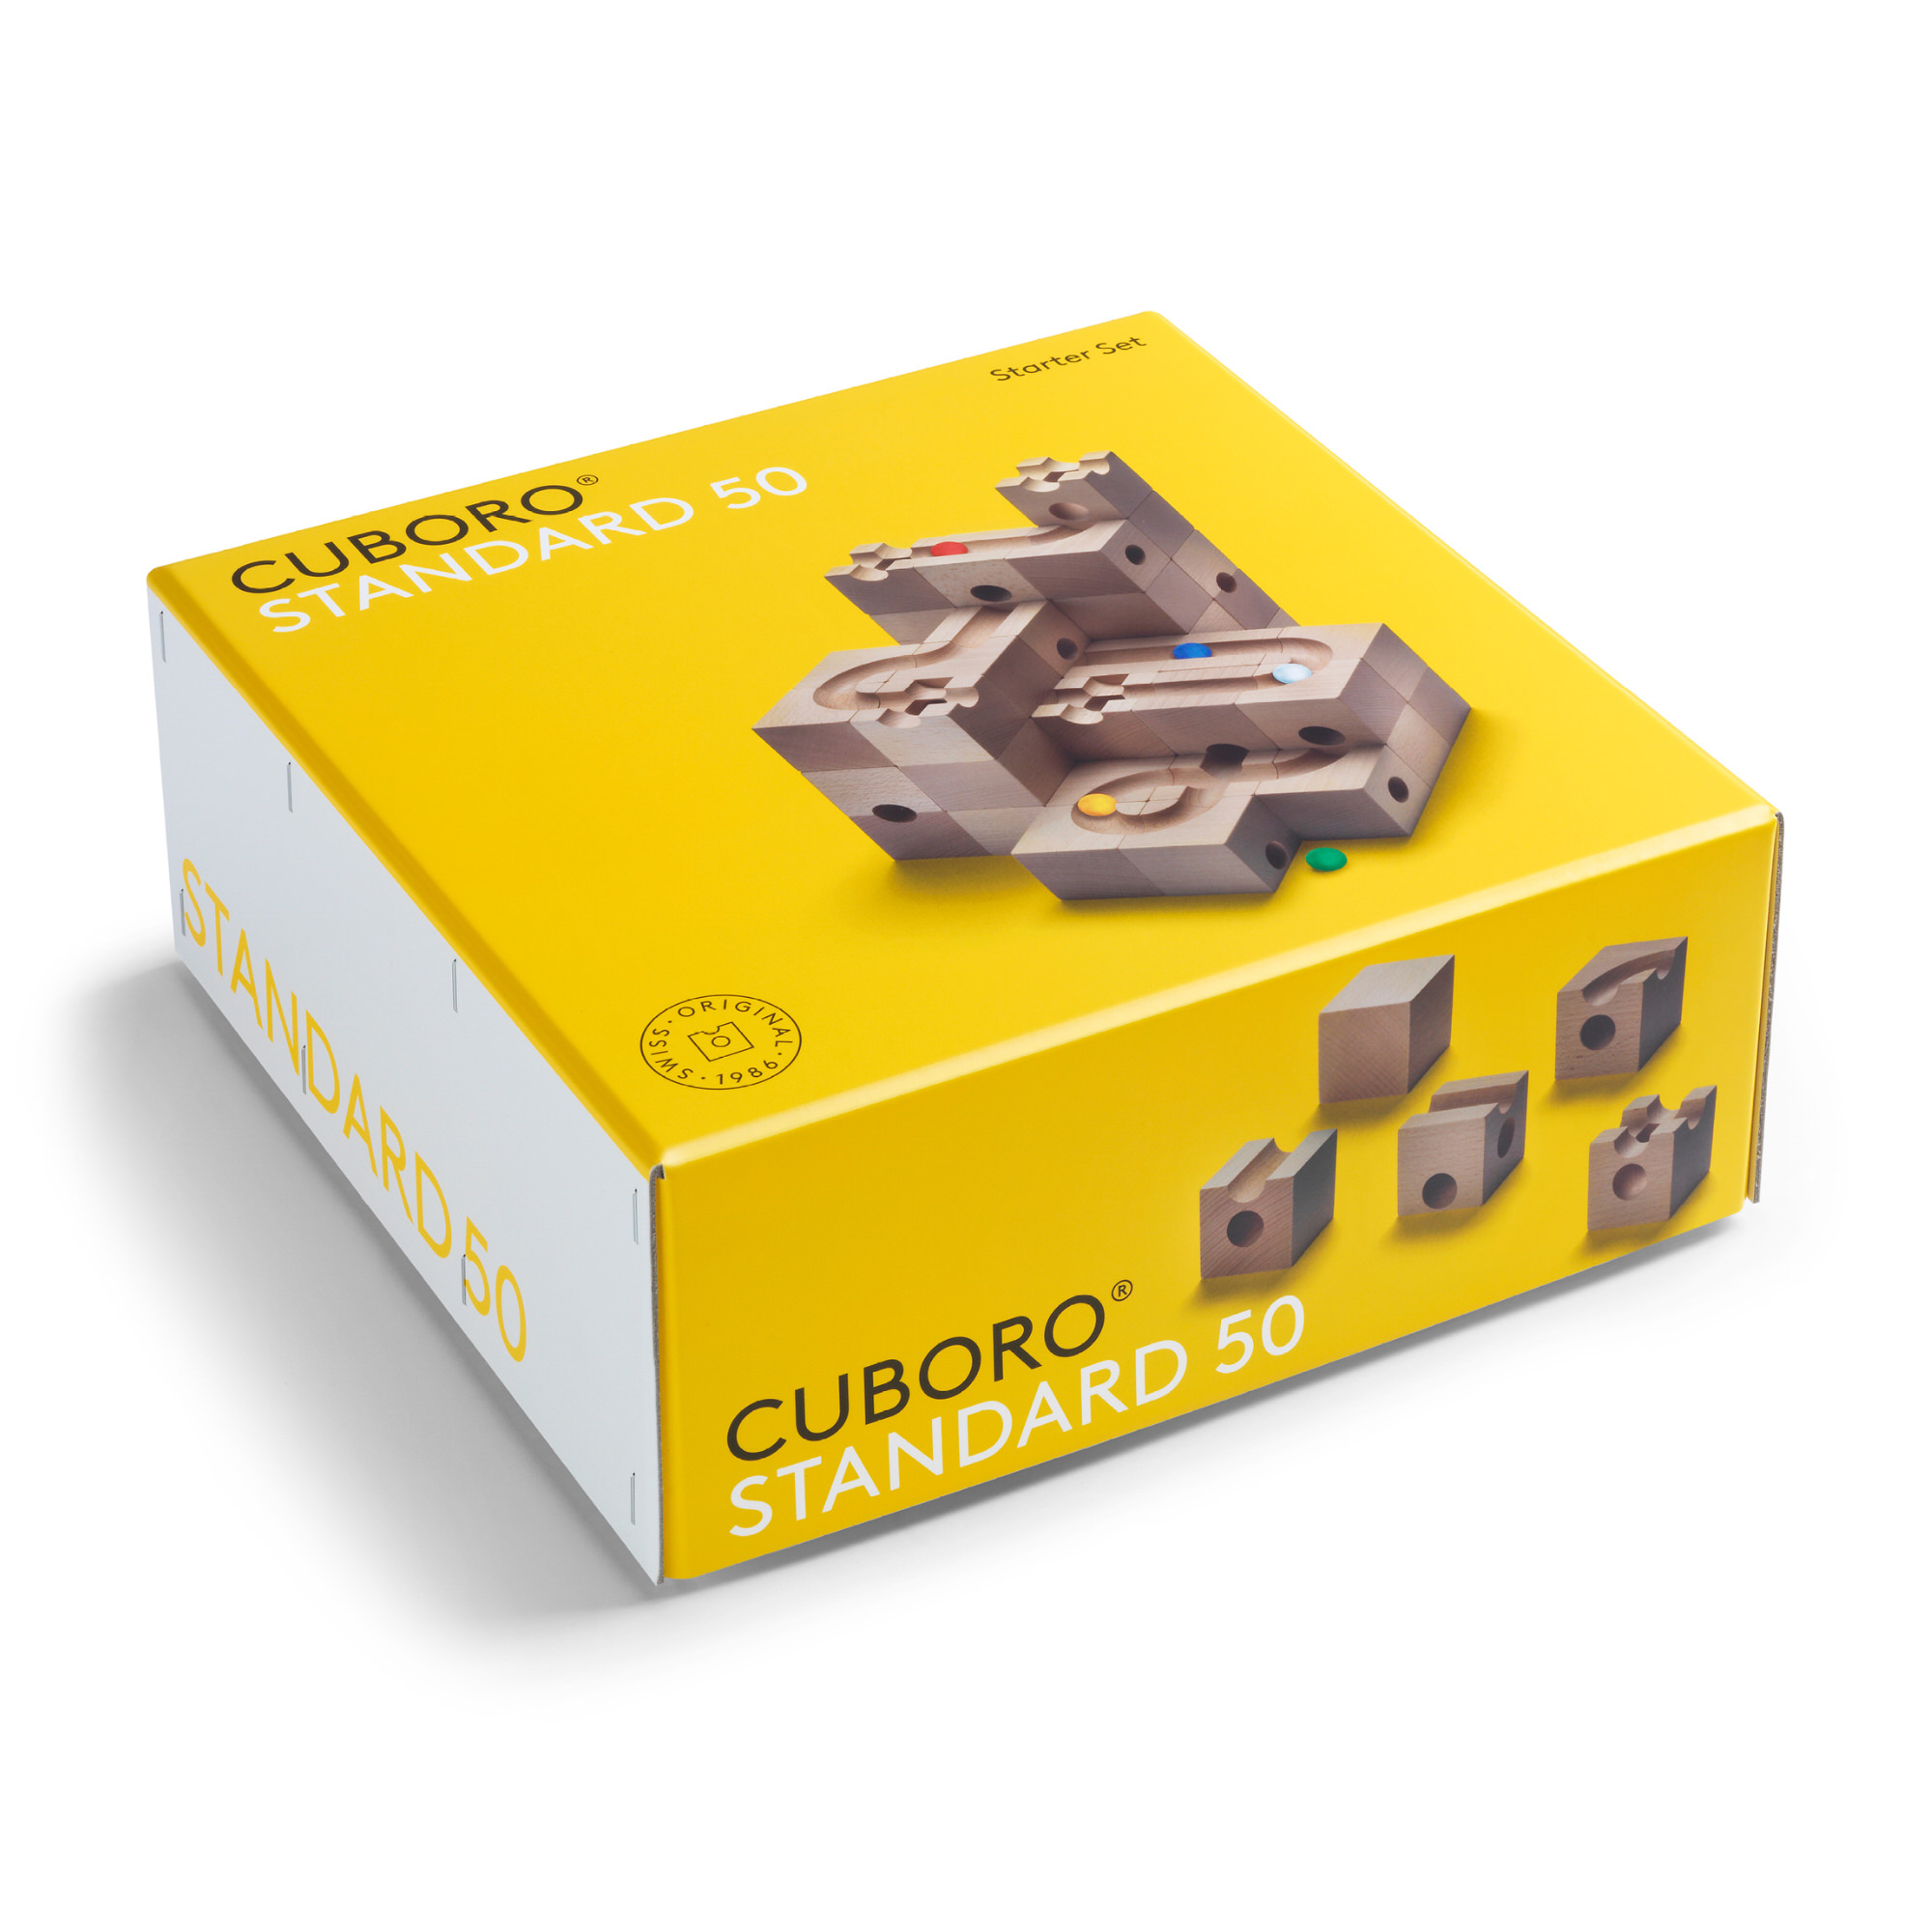 CUBORO | CUBORO STANDARD 50 marble run Starter Set made of Swiss wood